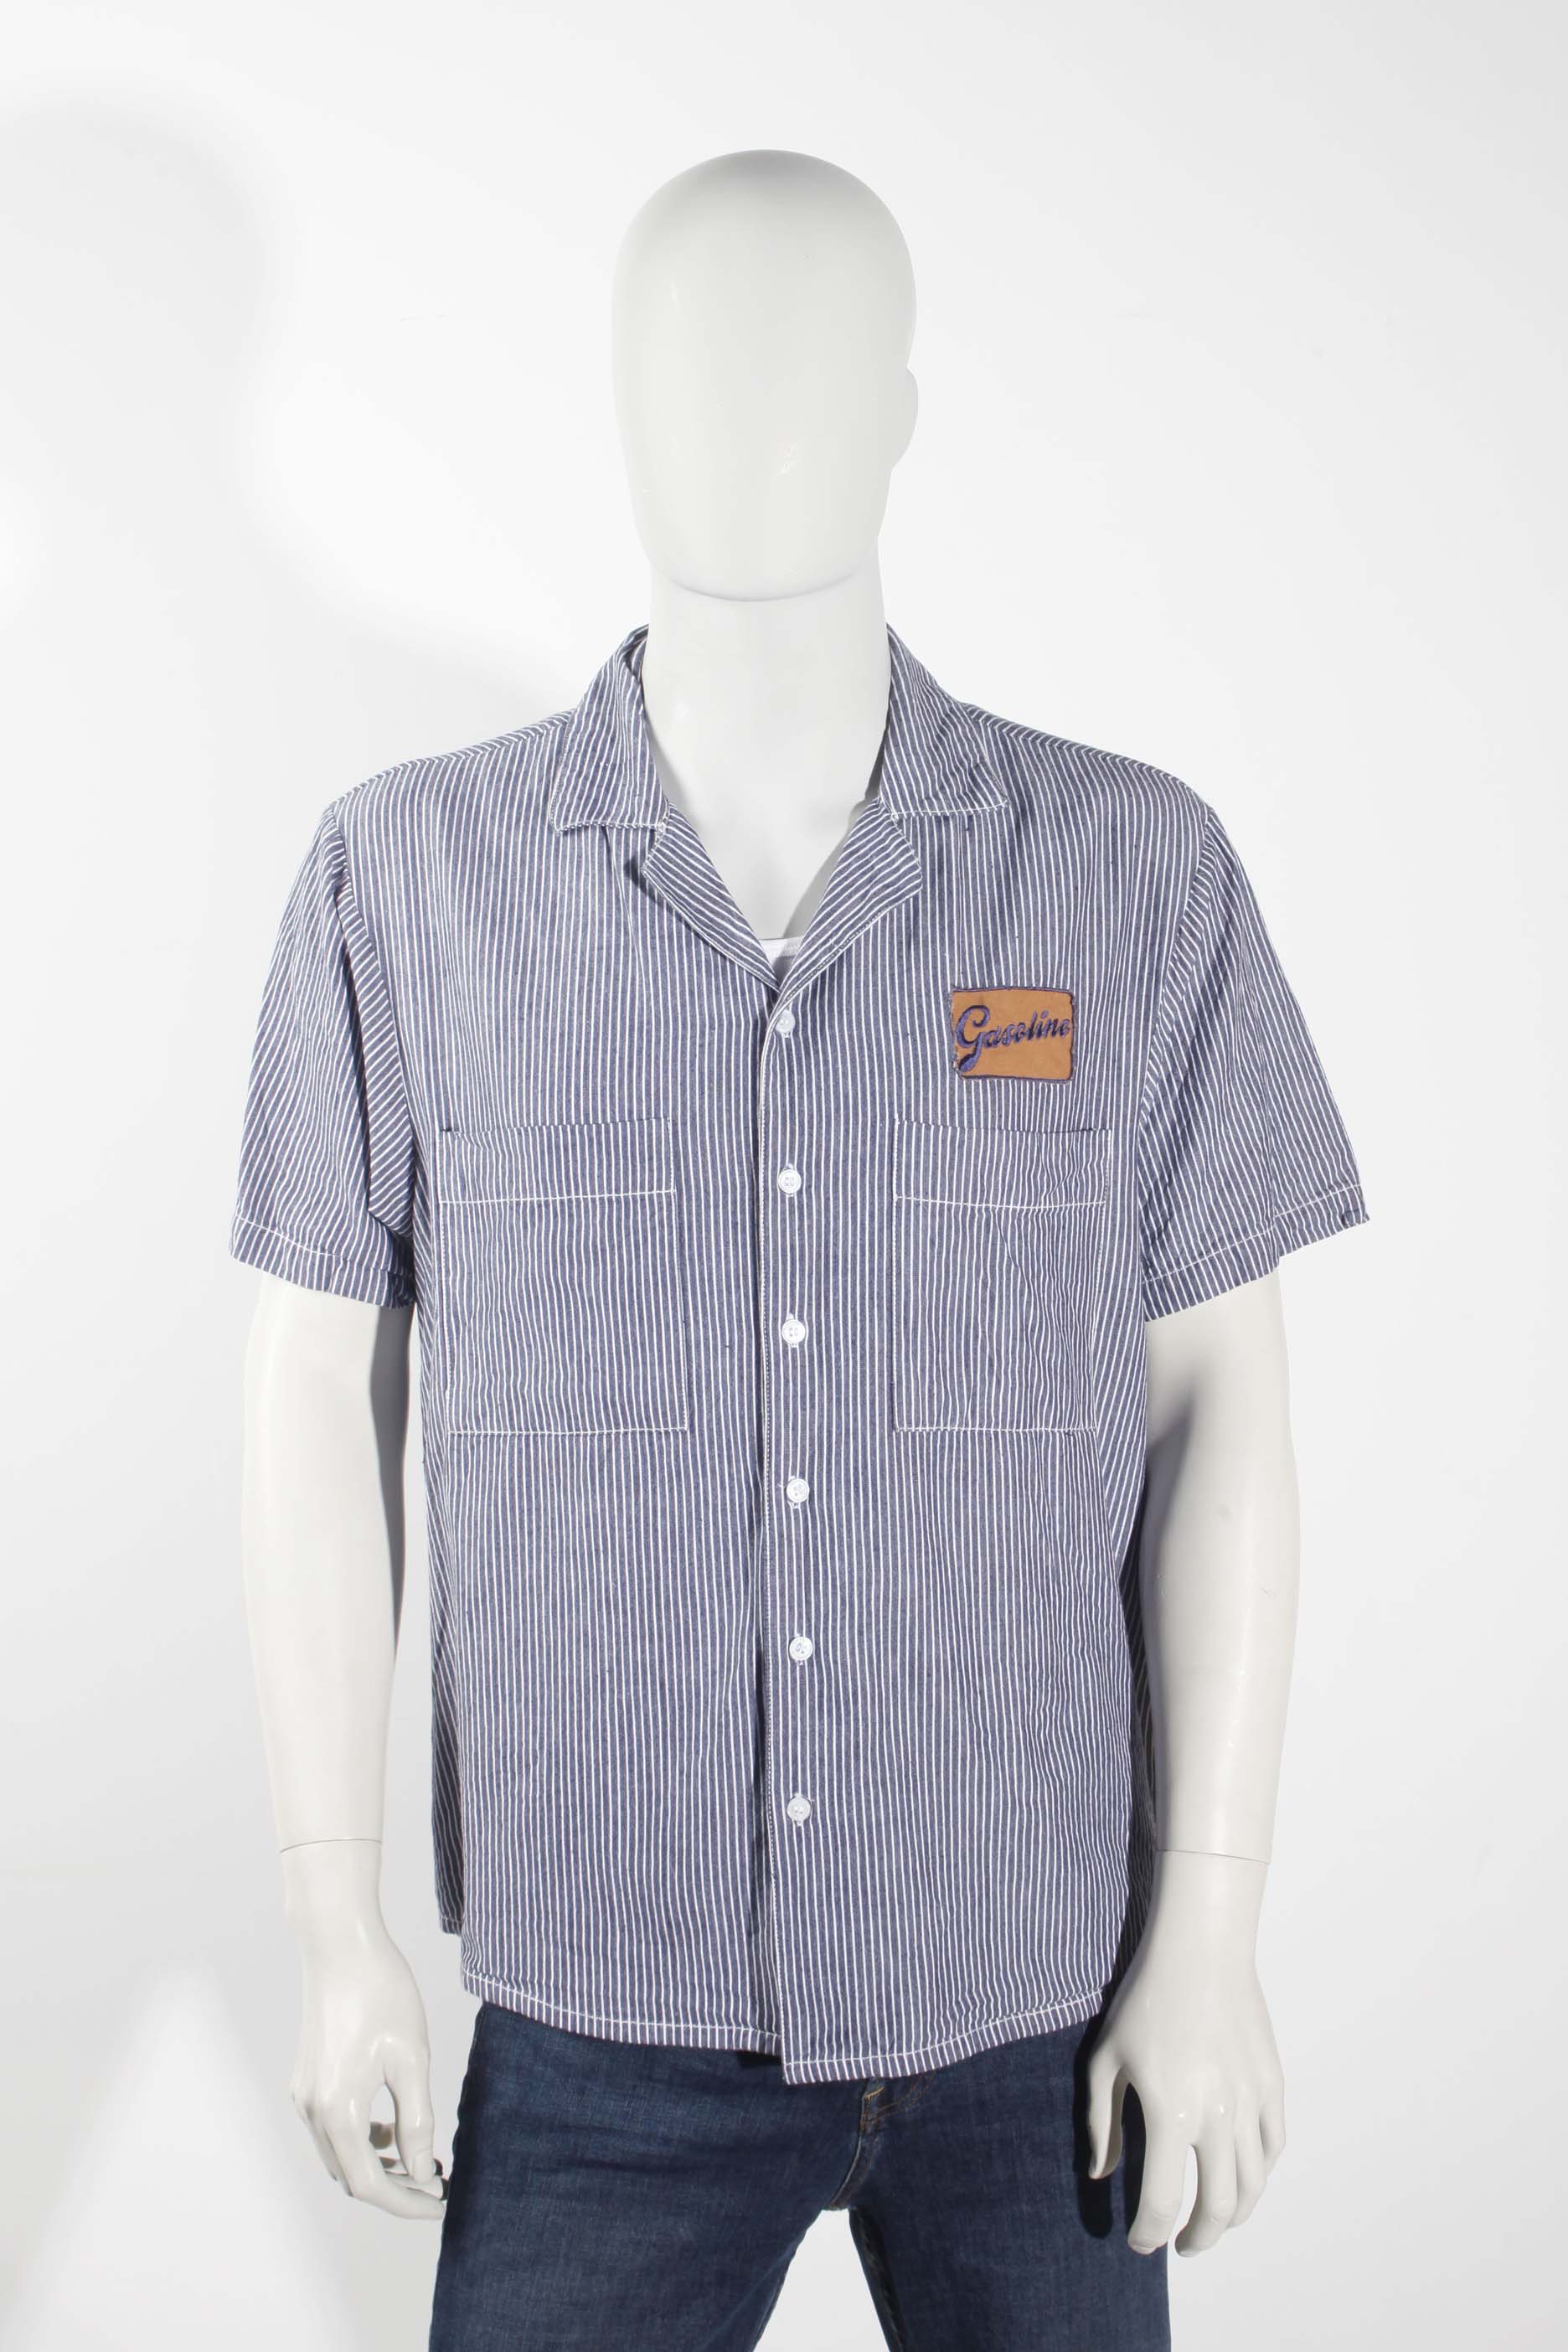 Retro Blue White Striped Short-Sleeved Shirt (Large)